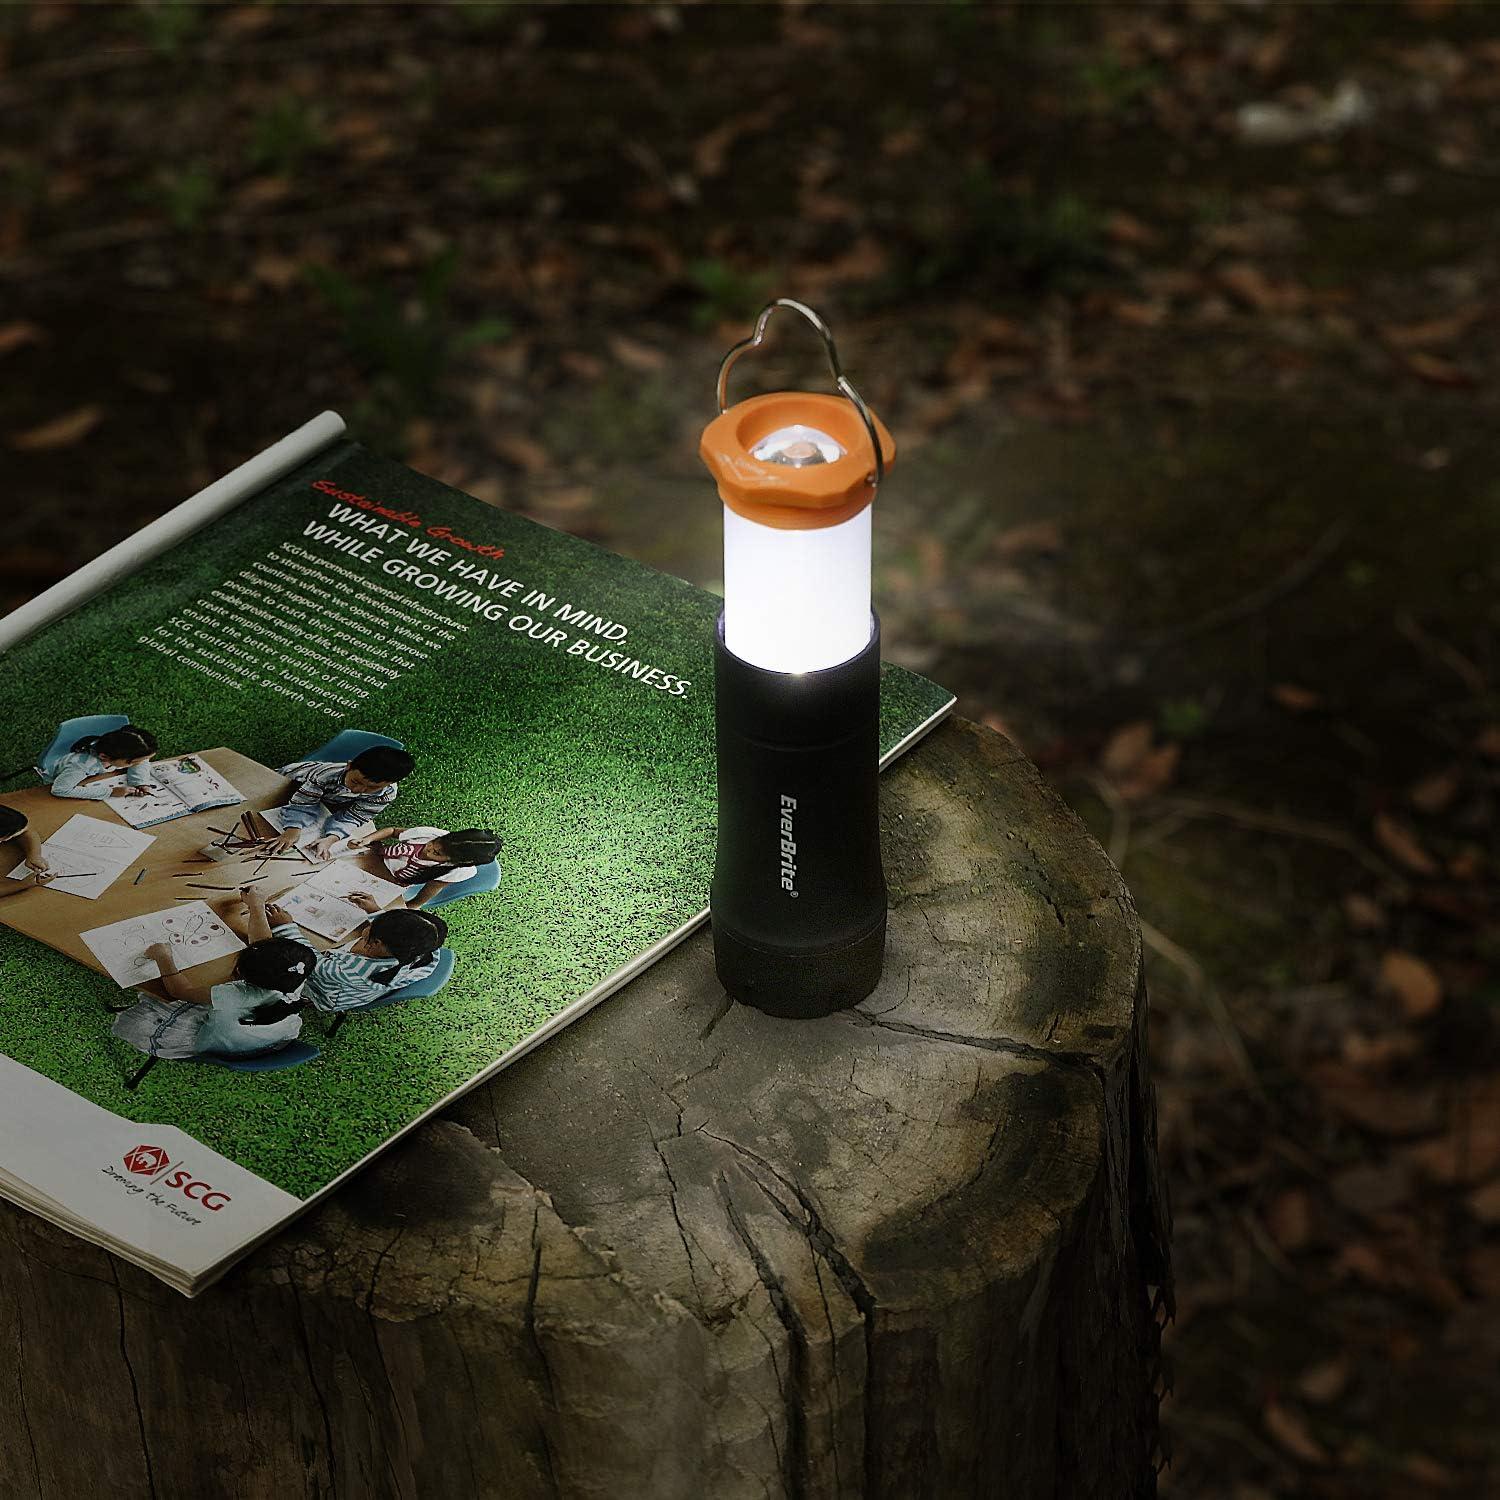 EverBrite LED Camping Lantern USB C Rechargeable Lantern Camping Lights  Lanterns